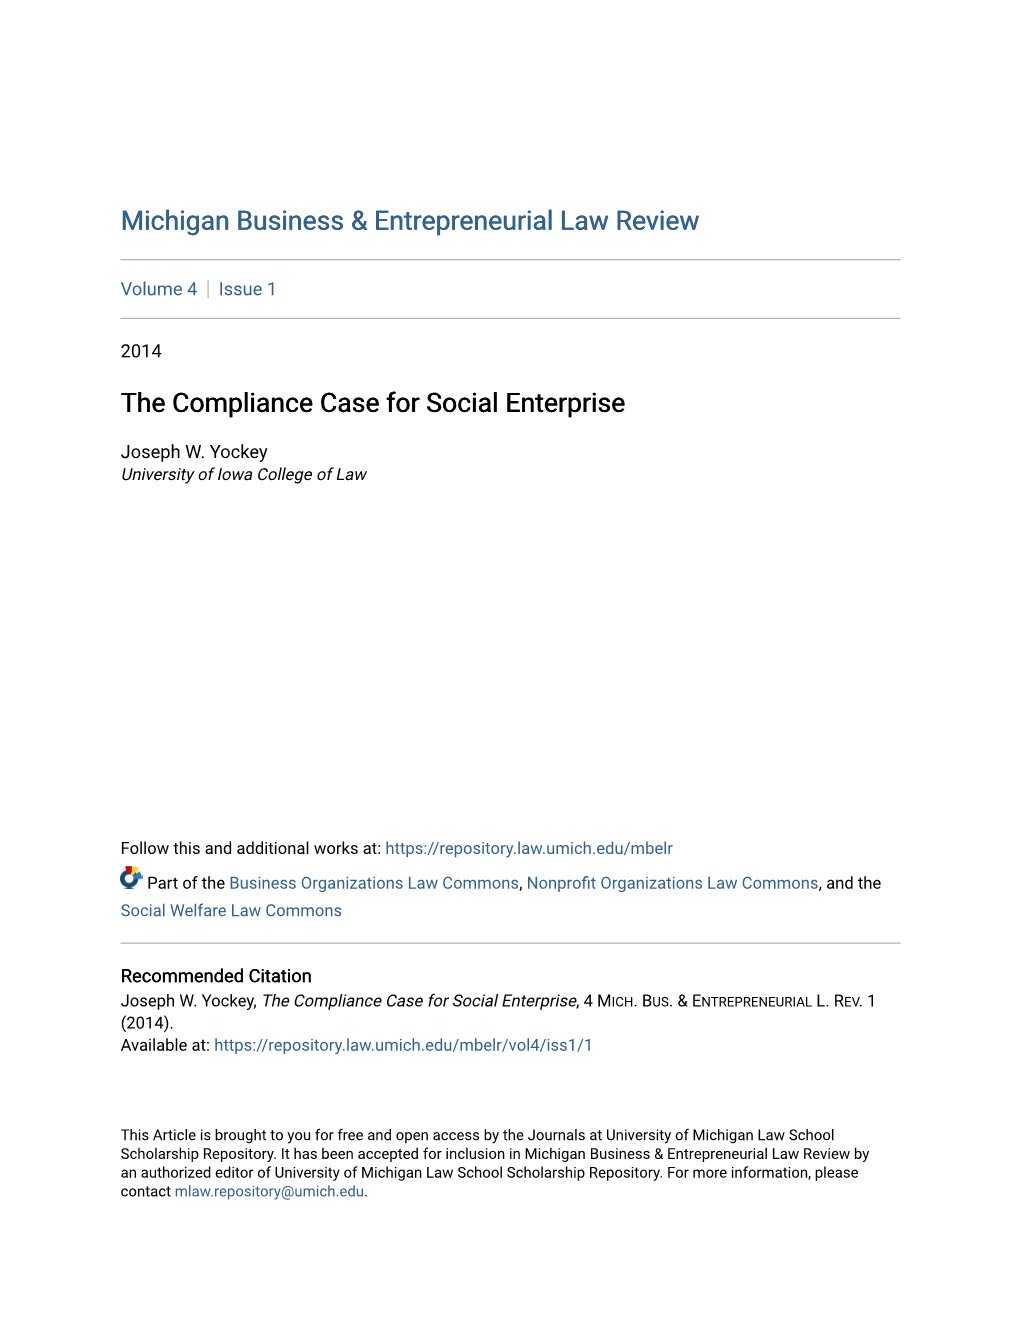 The Compliance Case for Social Enterprise